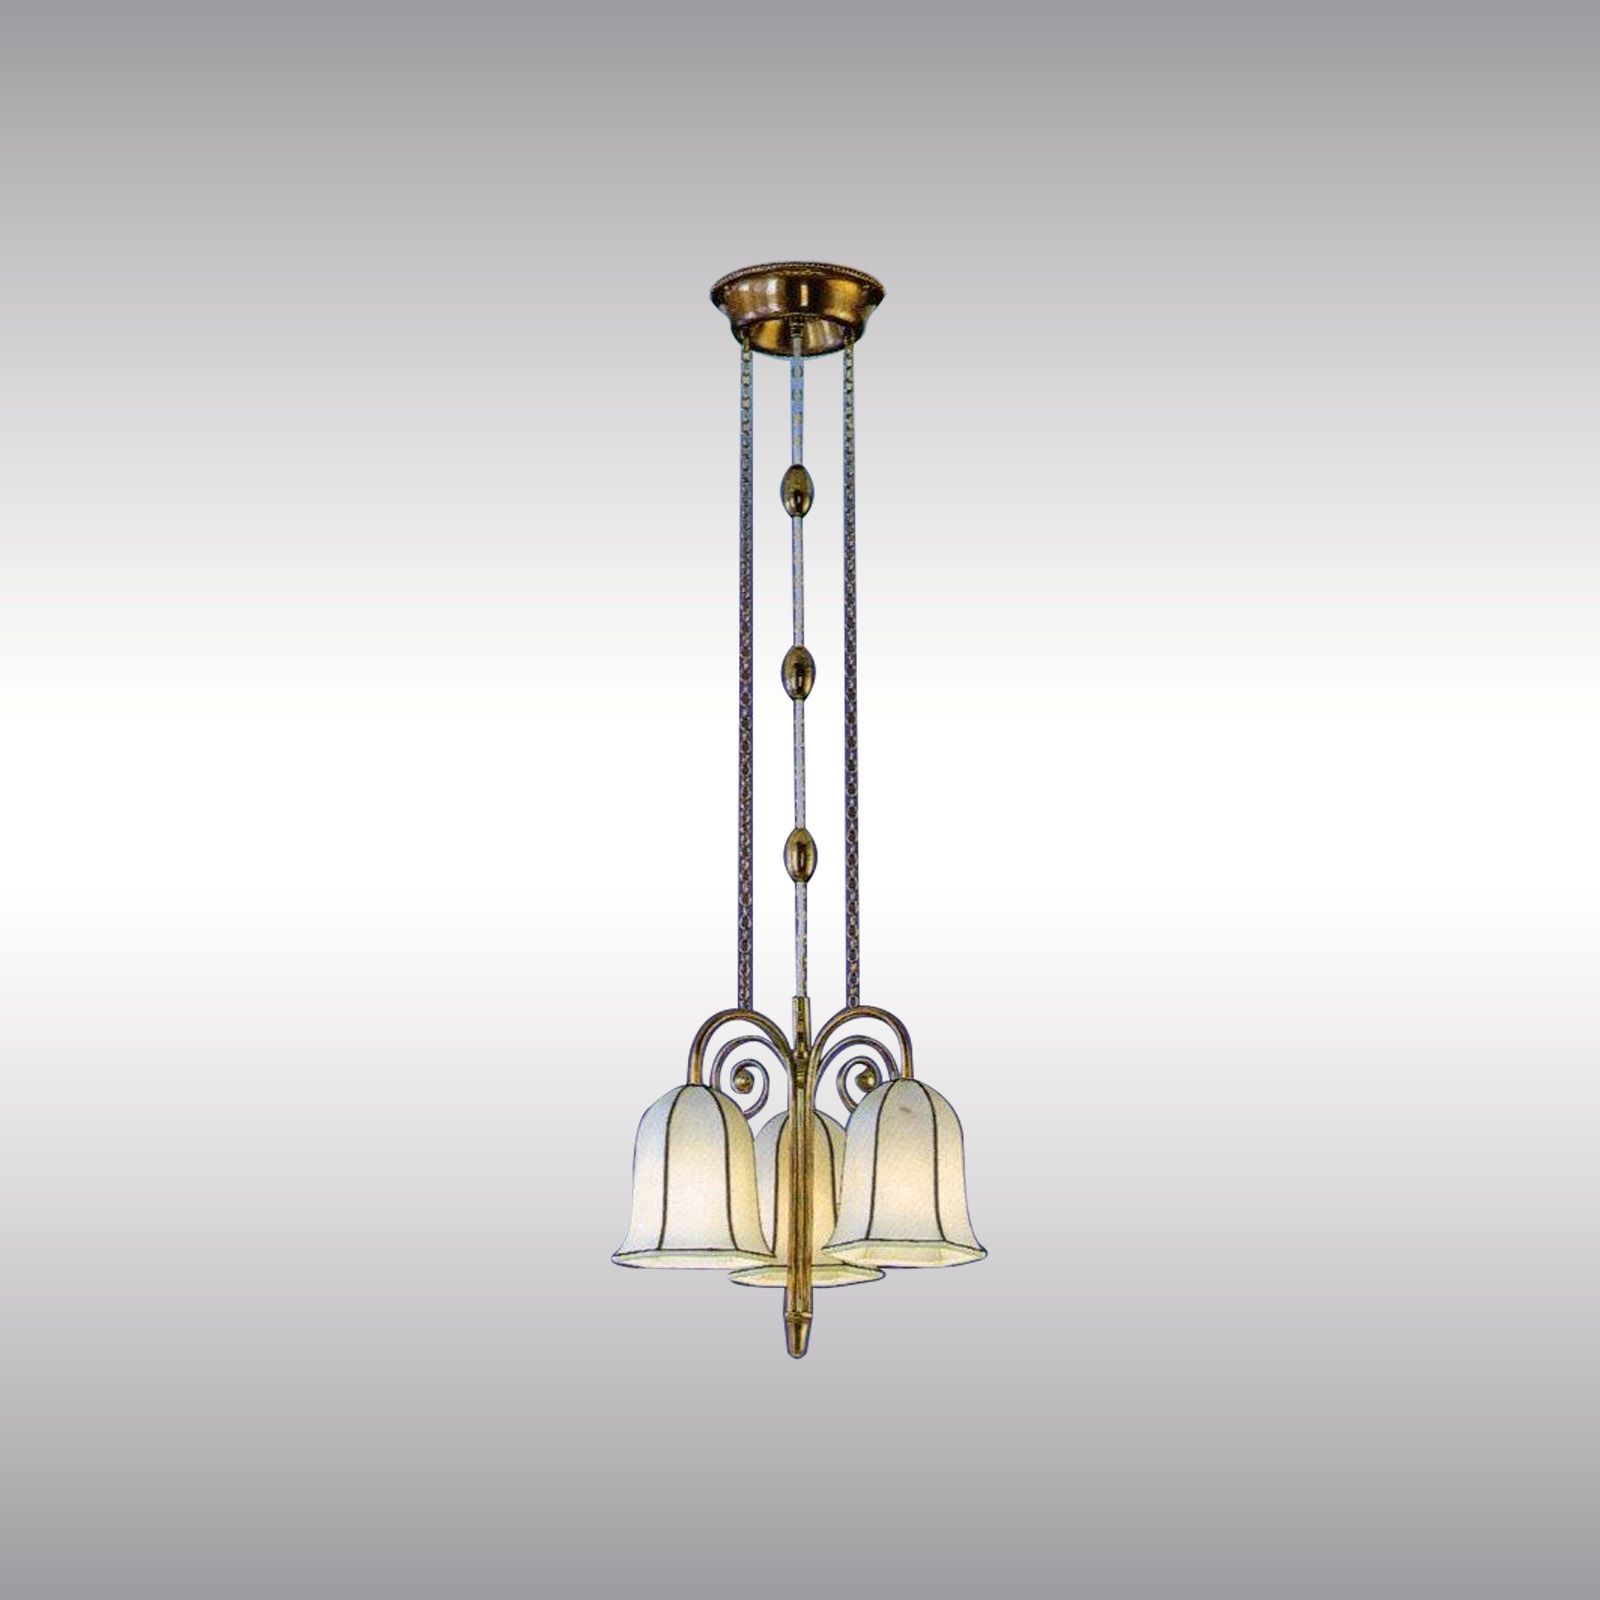 WOKA LAMPS VIENNA - OrderNr.: 21608|WW-M1652 - Design: Josef Hoffmann